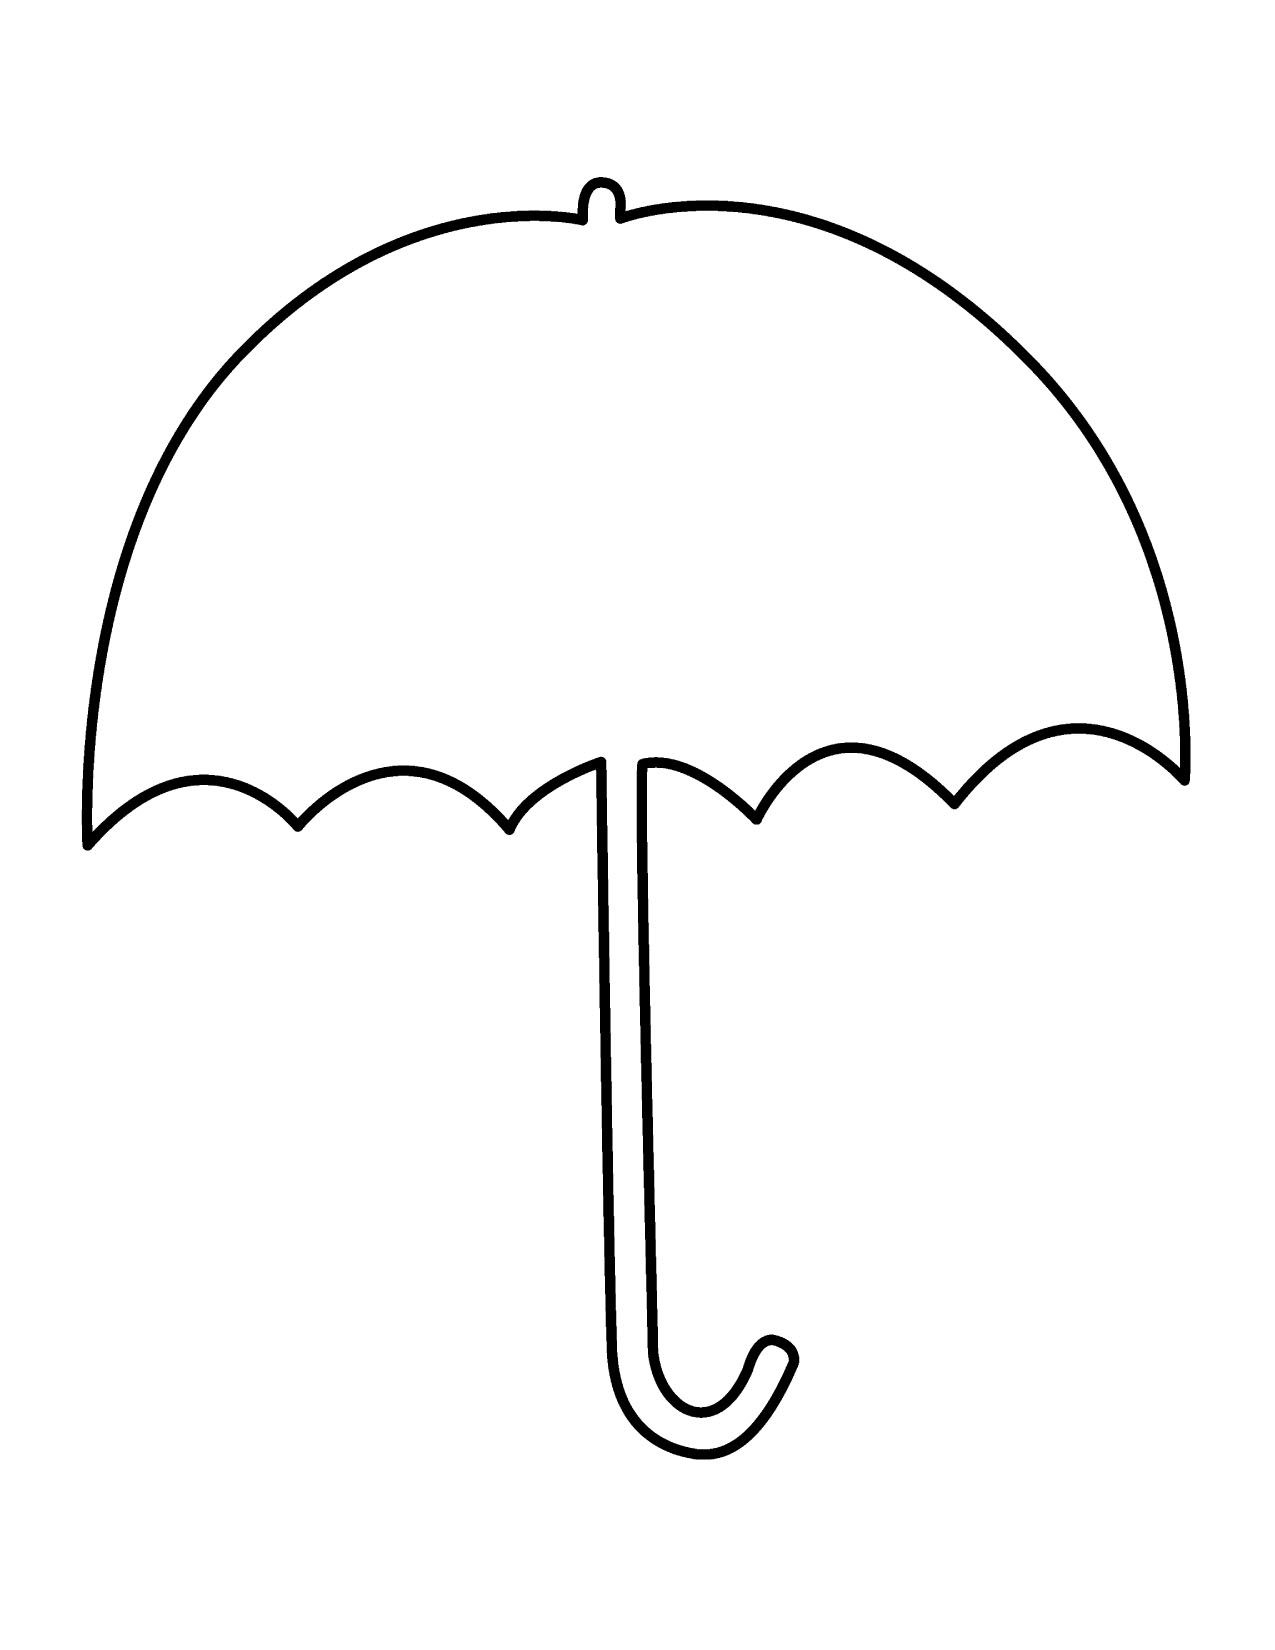 Umbrella Clip Art Outline Clipart Panda Free Clipart Images For Blank Umbrella Template